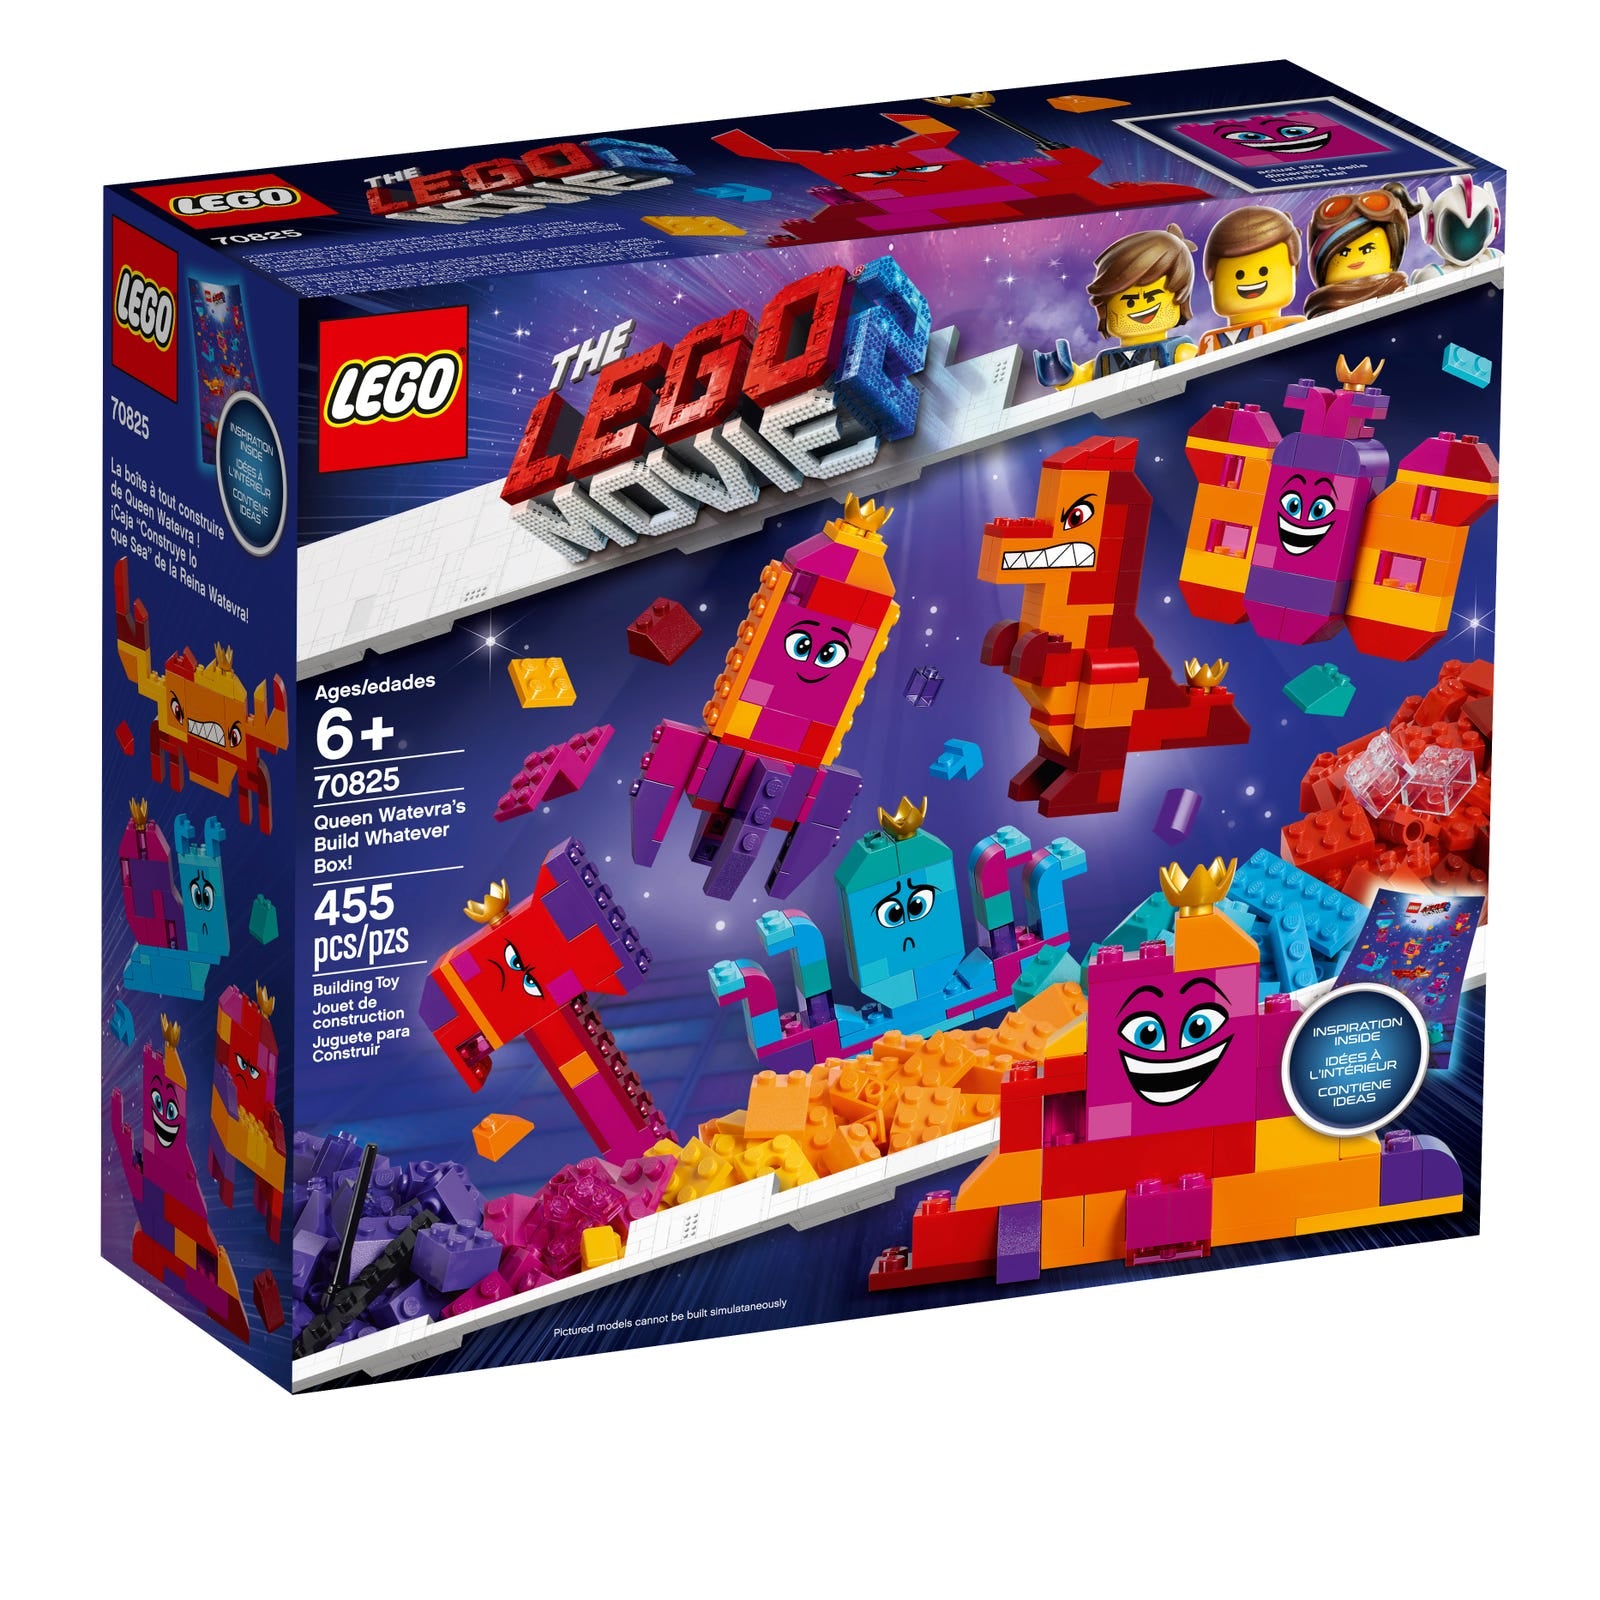 Lego Movie 2 Queen Watevras Build Whatever Box 70825